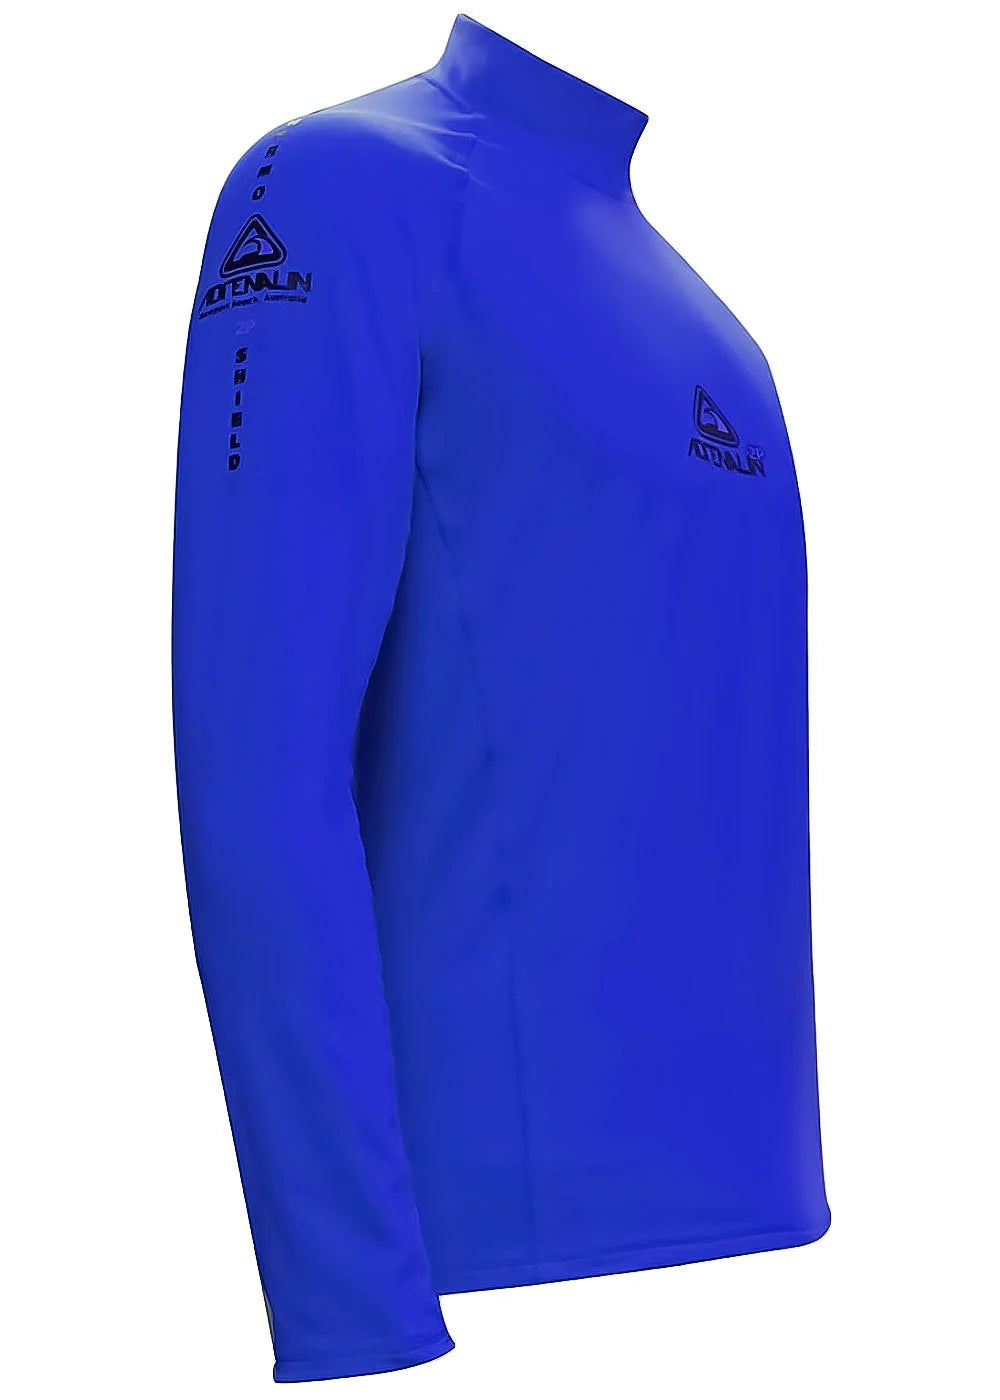 Adrenalin 2P Thermo Shield Junior Long-Sleeve Top